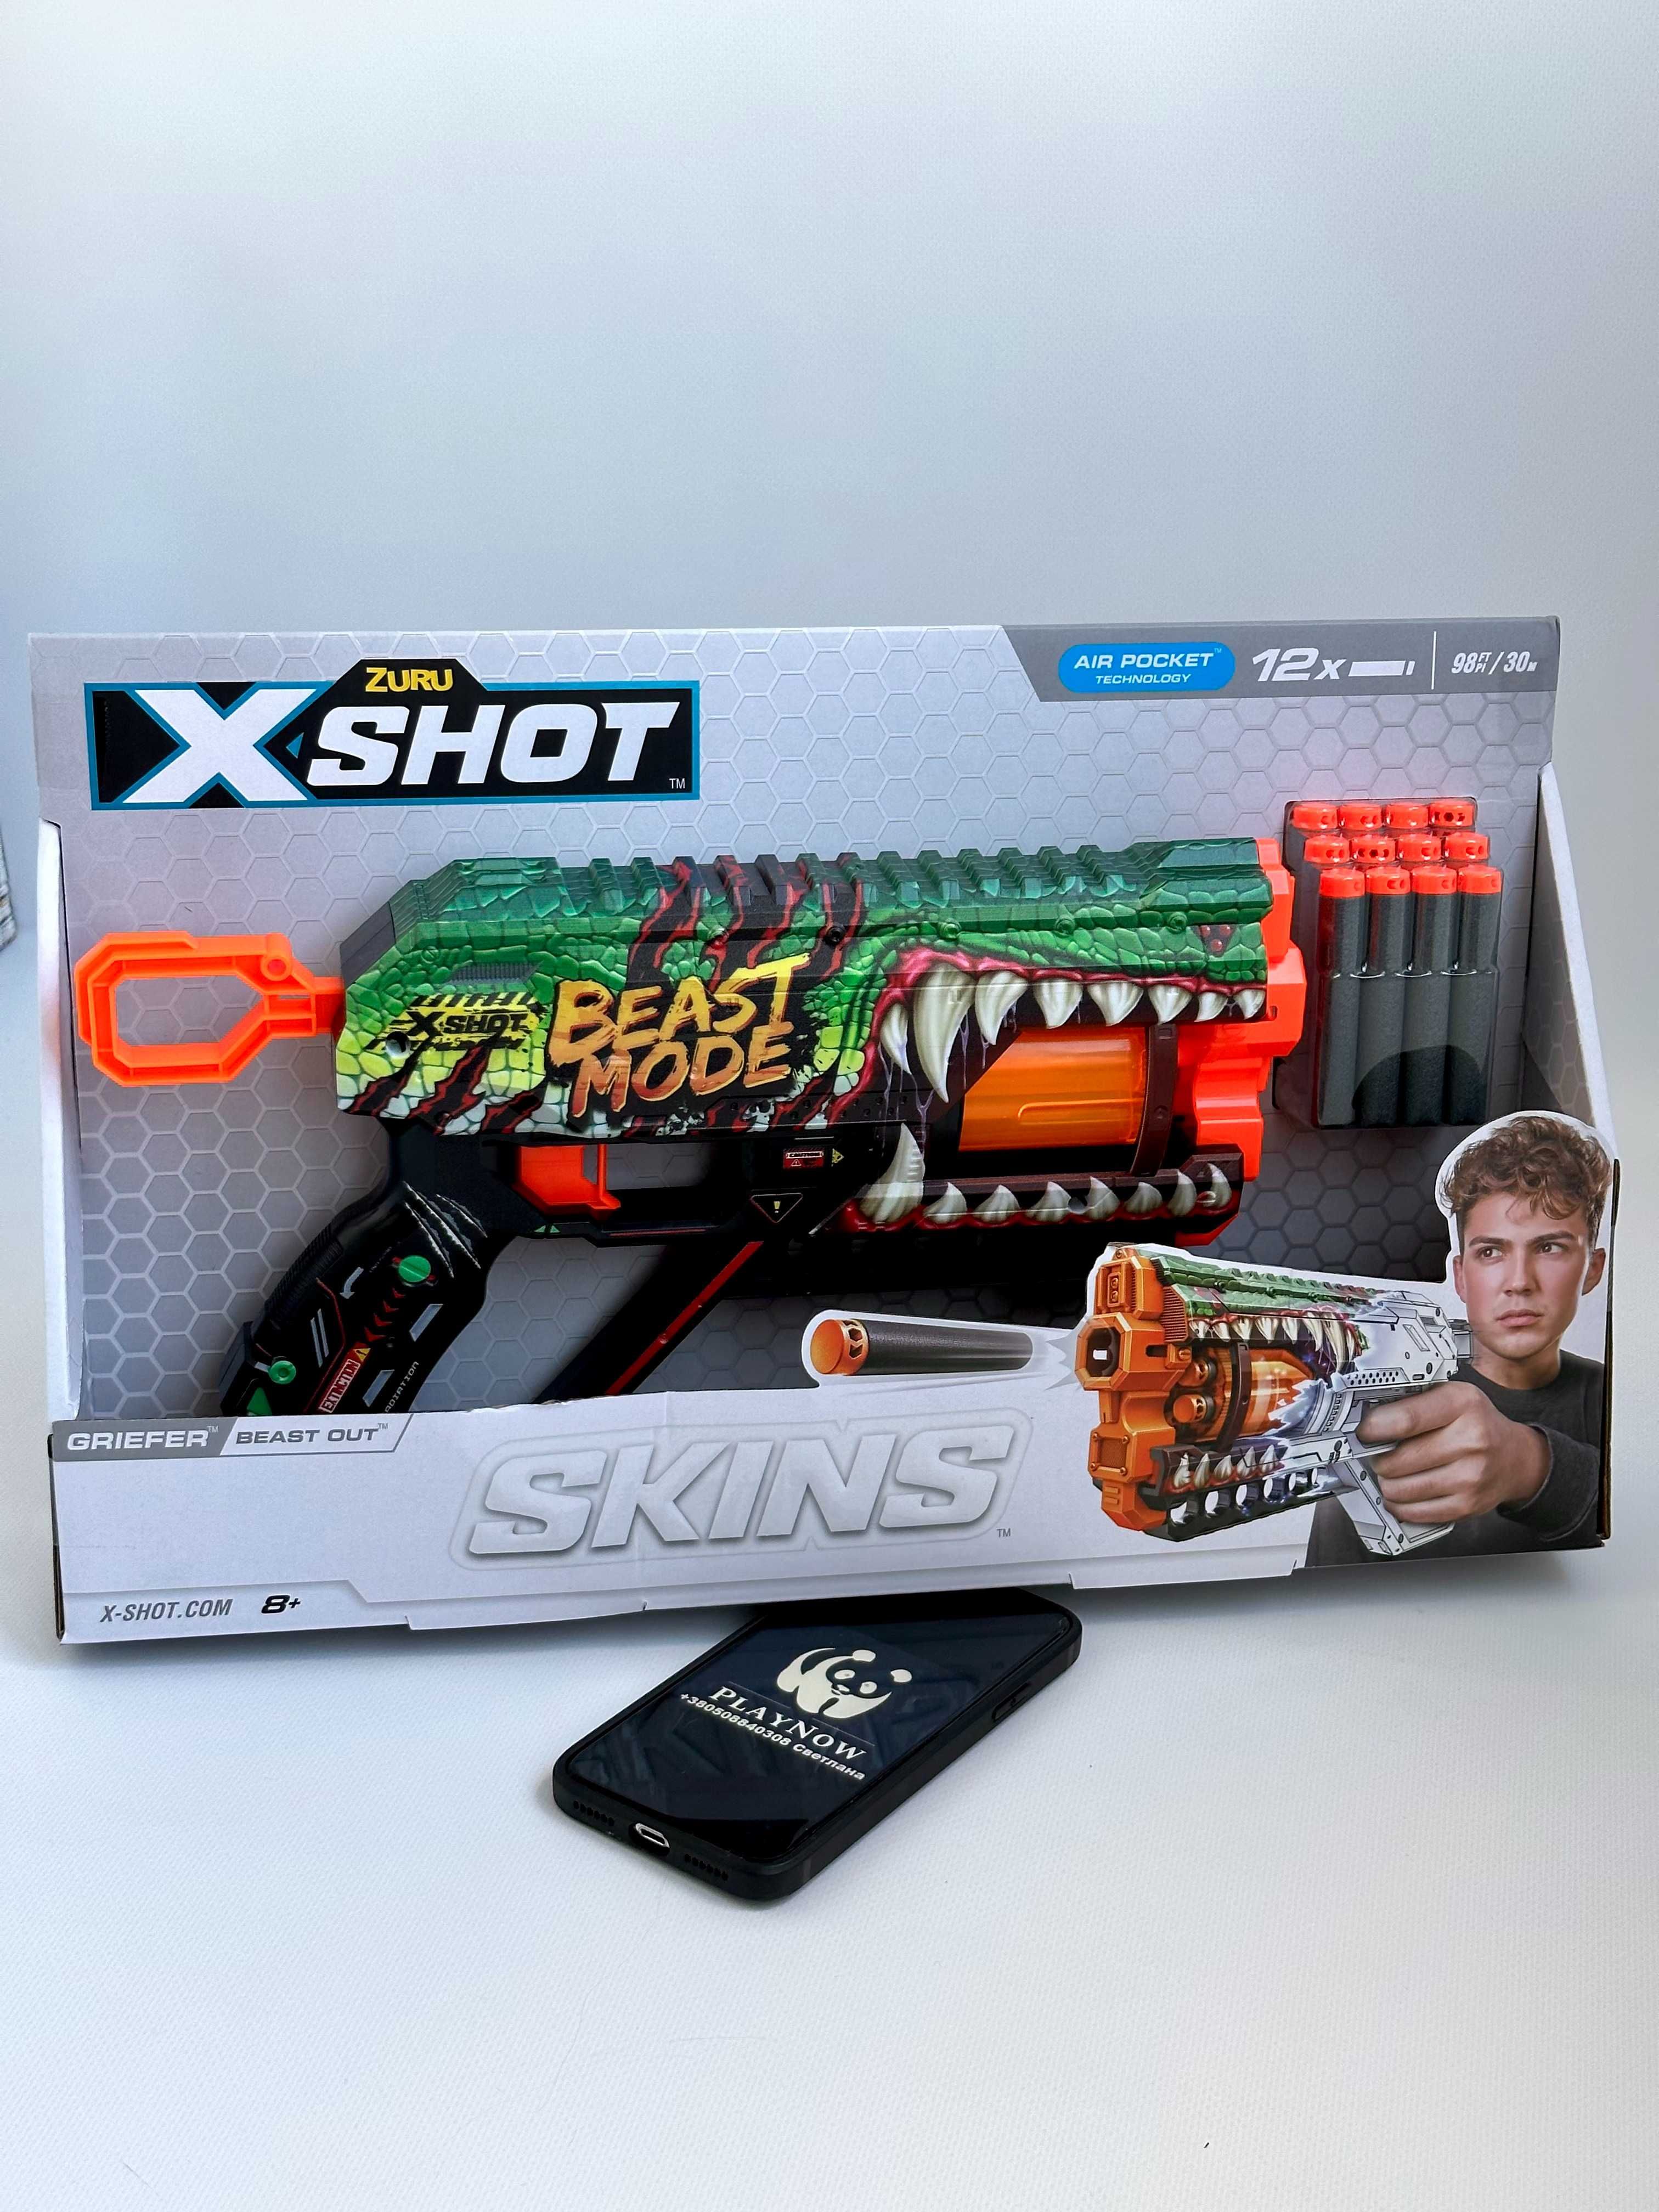 Топ Ціна! Швидкострільний бластер X-Shot / Детское оружие бластер *